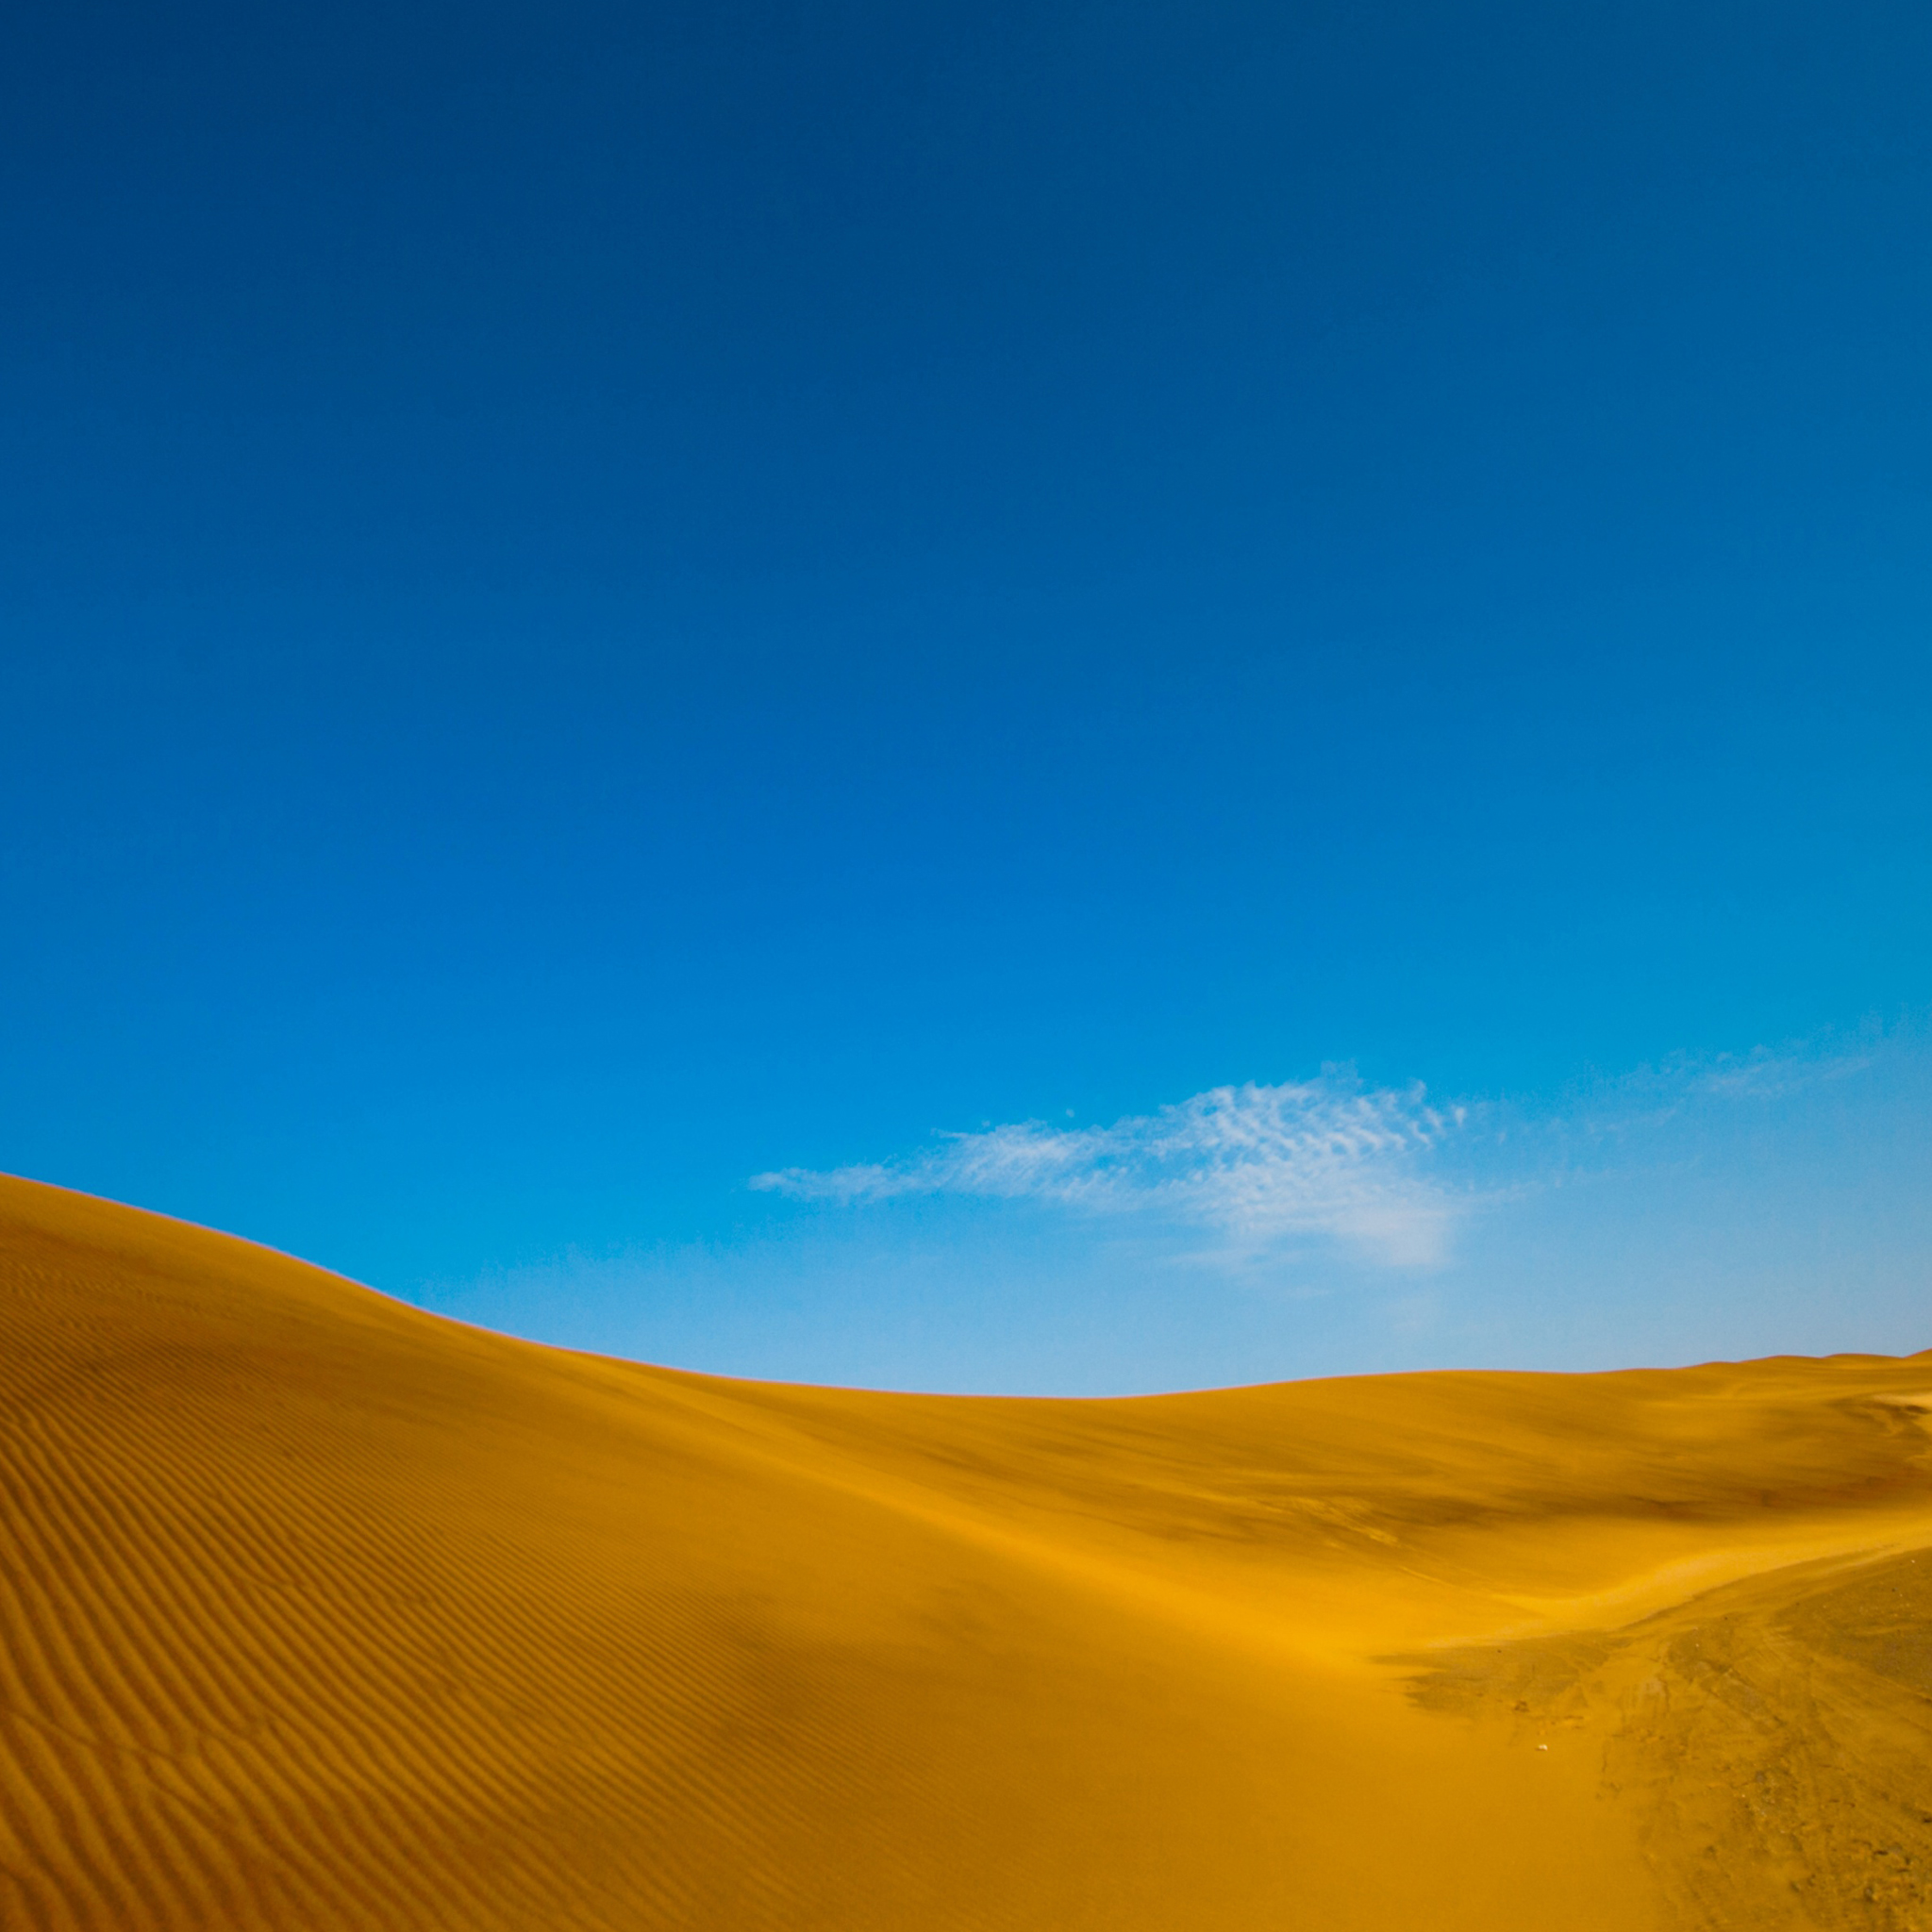 ipad fondos de pantalla hd,desierto,cielo,arena,azul,ergio